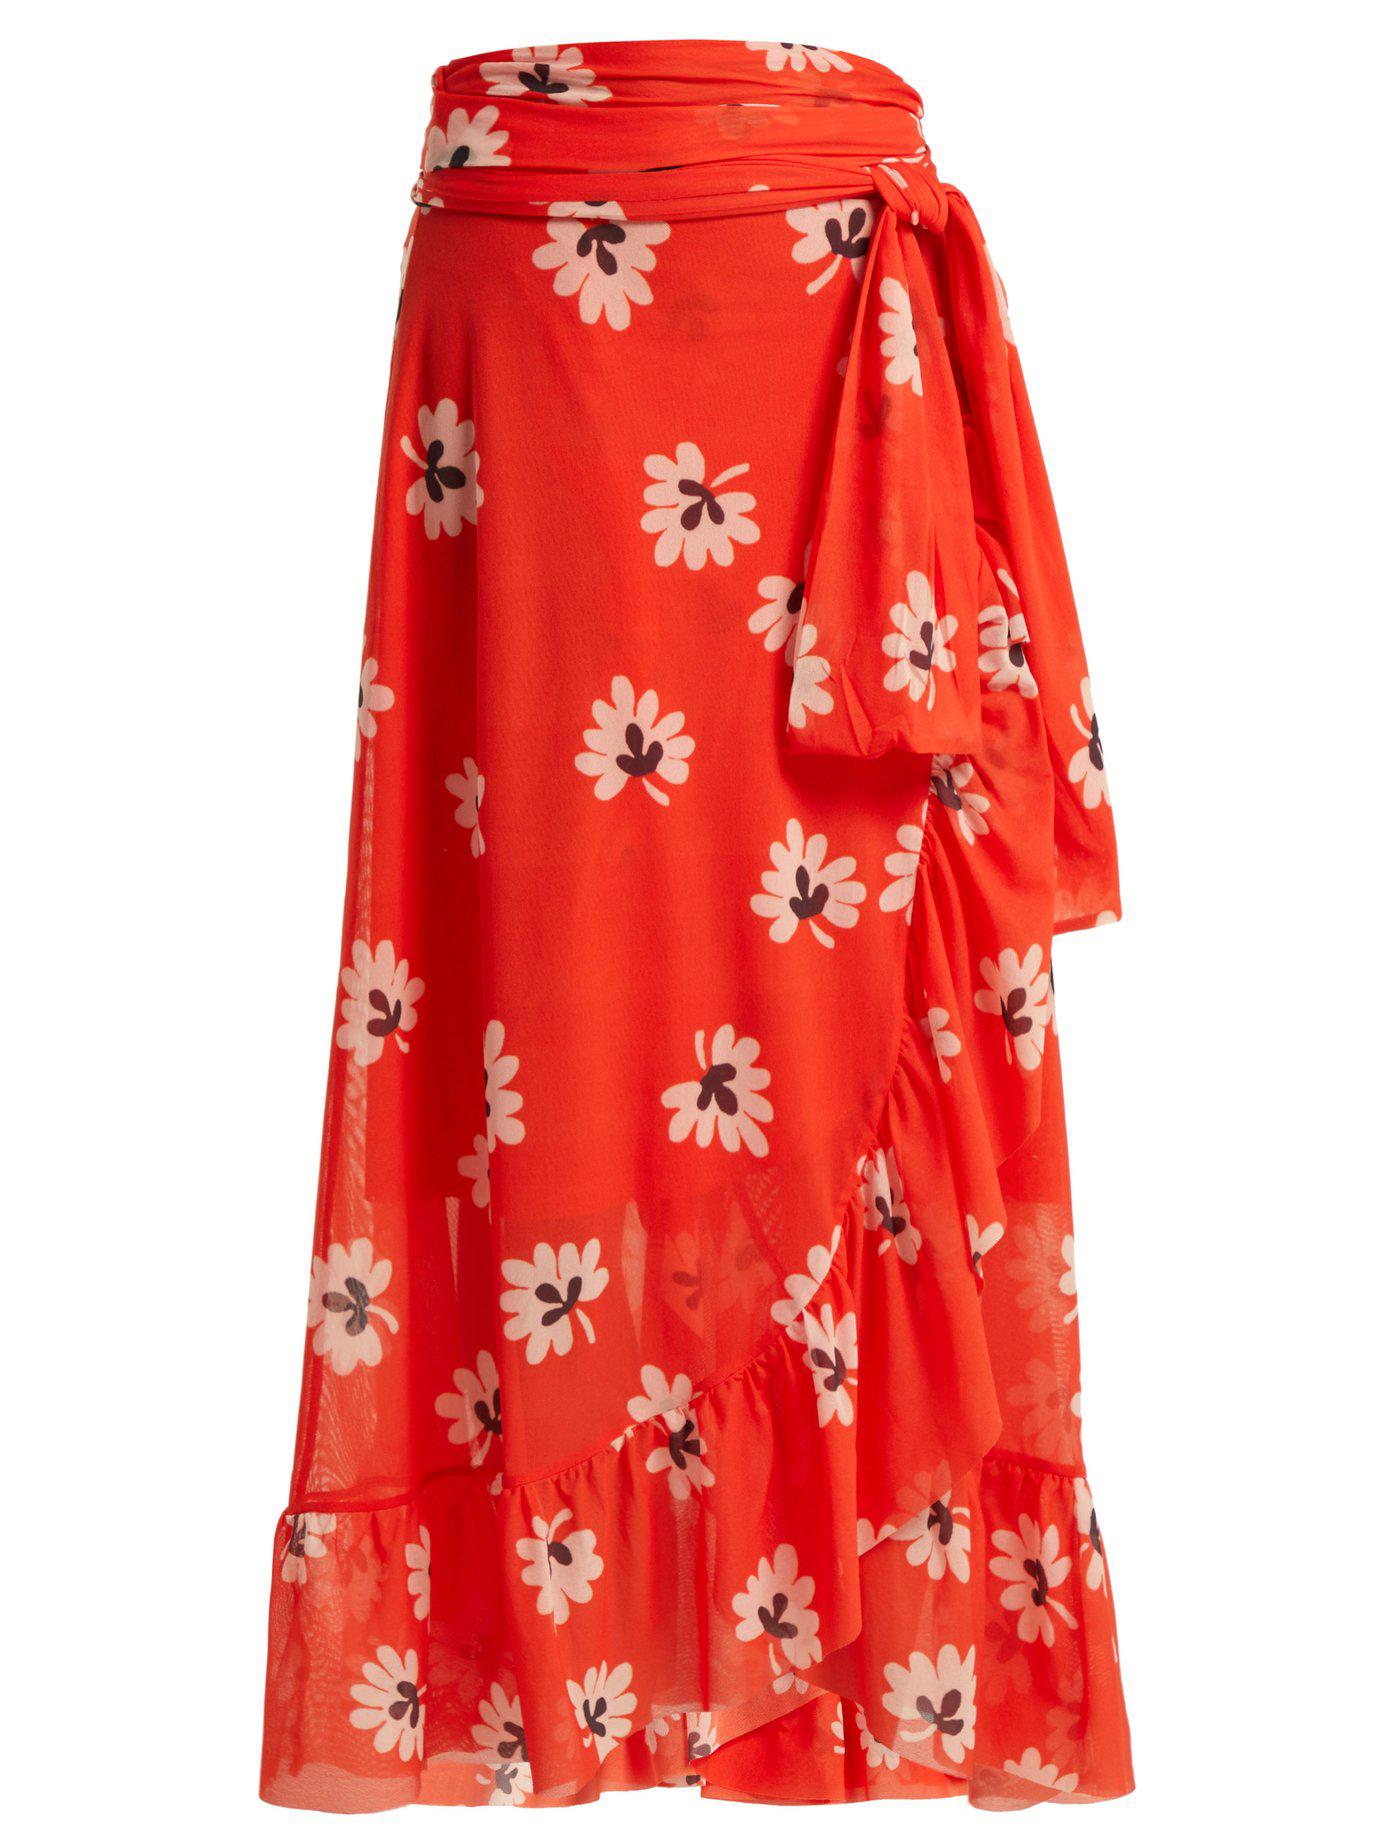 Ganni Synthetic Tilden Floral Mesh Ruffled Midi Wrap Skirt in Red - Lyst